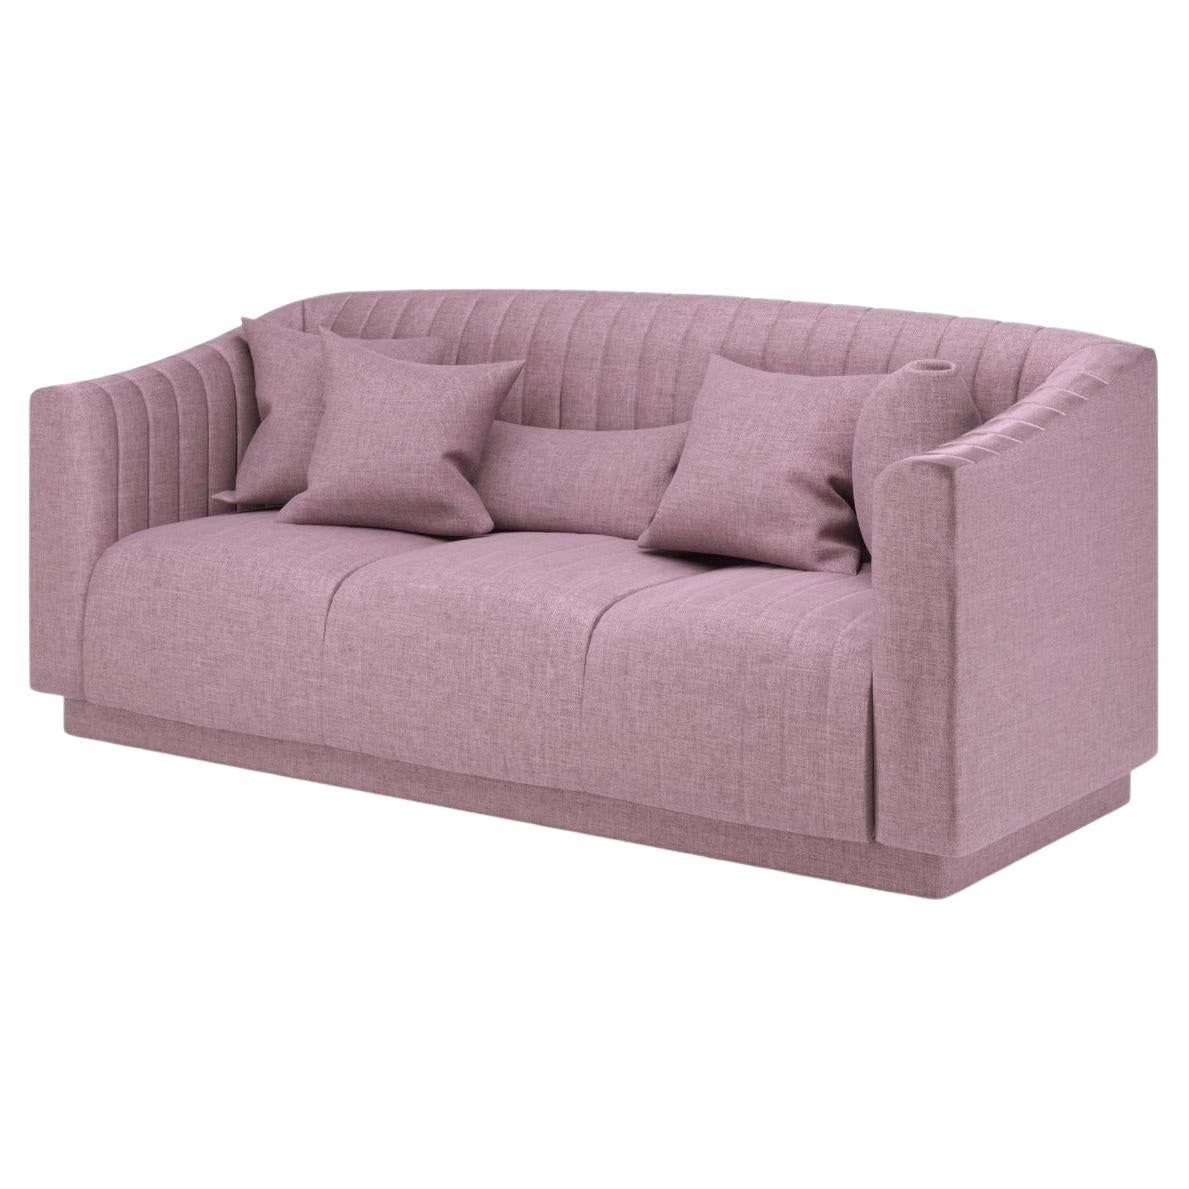 Lilac Linen Modern Uphostery Sofa